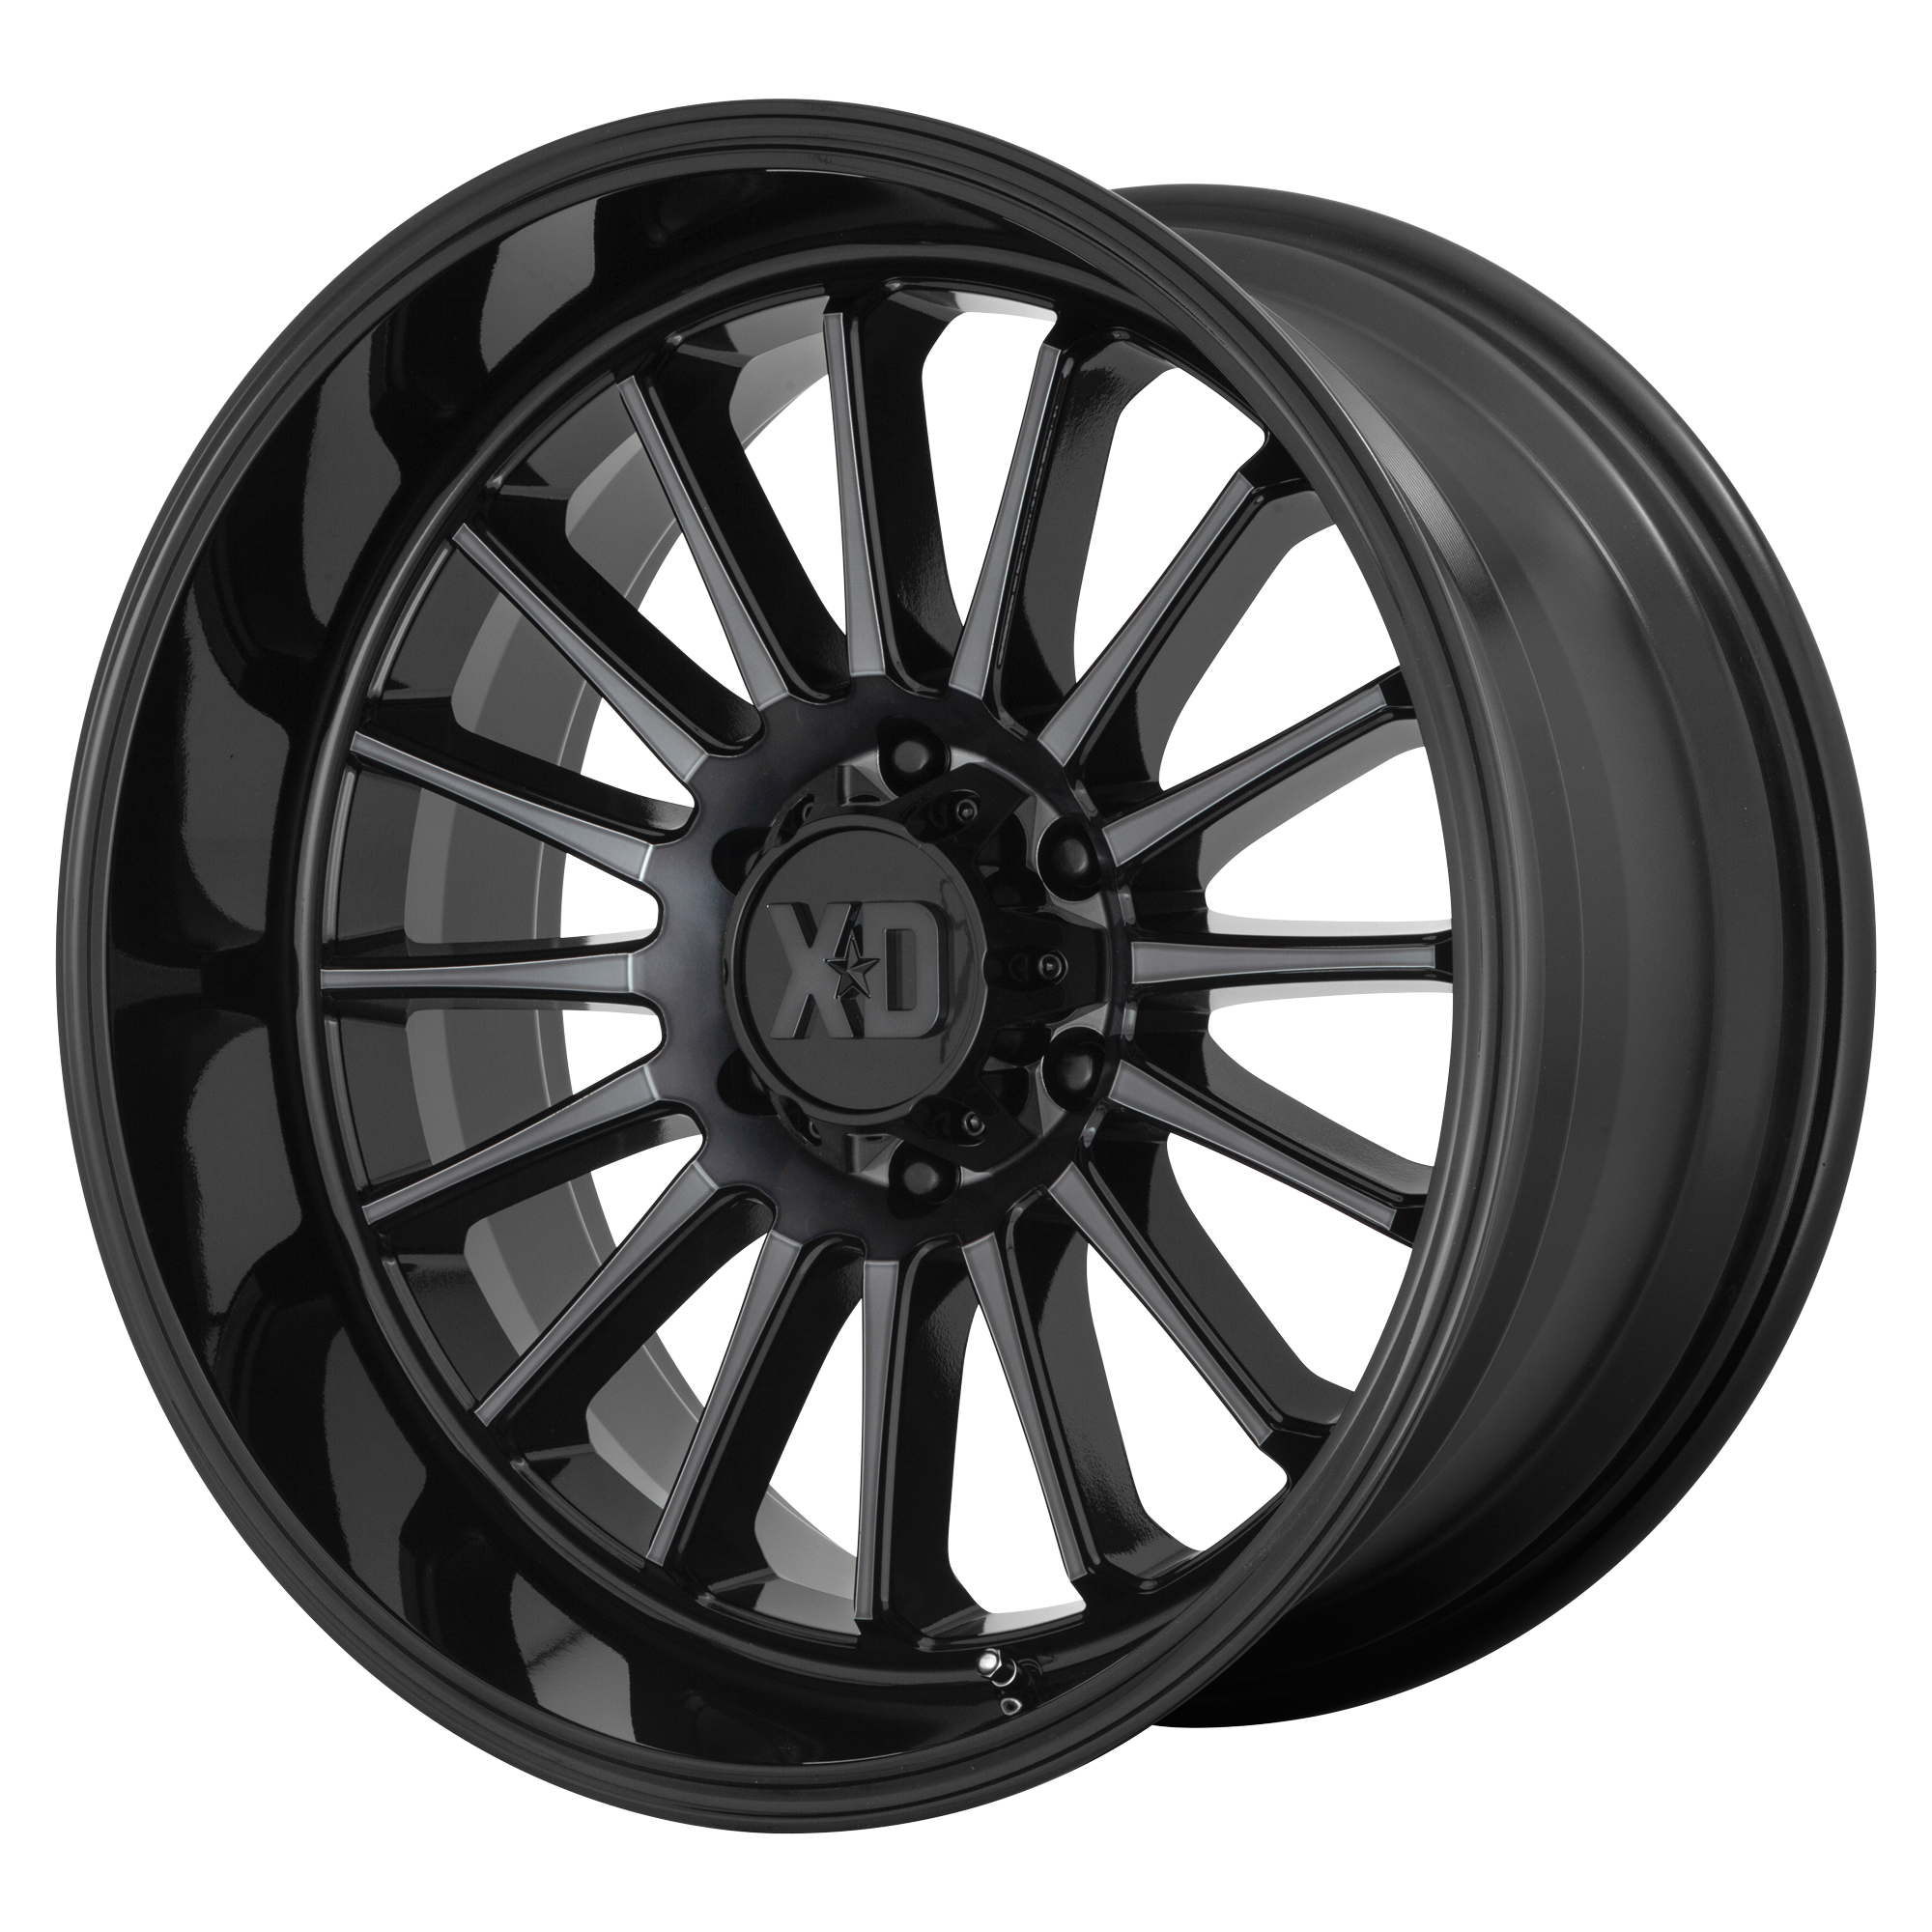 XD 20"x9" Non-Chrome Gloss Black With Gray Tint Custom Wheel ARSWCWXD85729080400